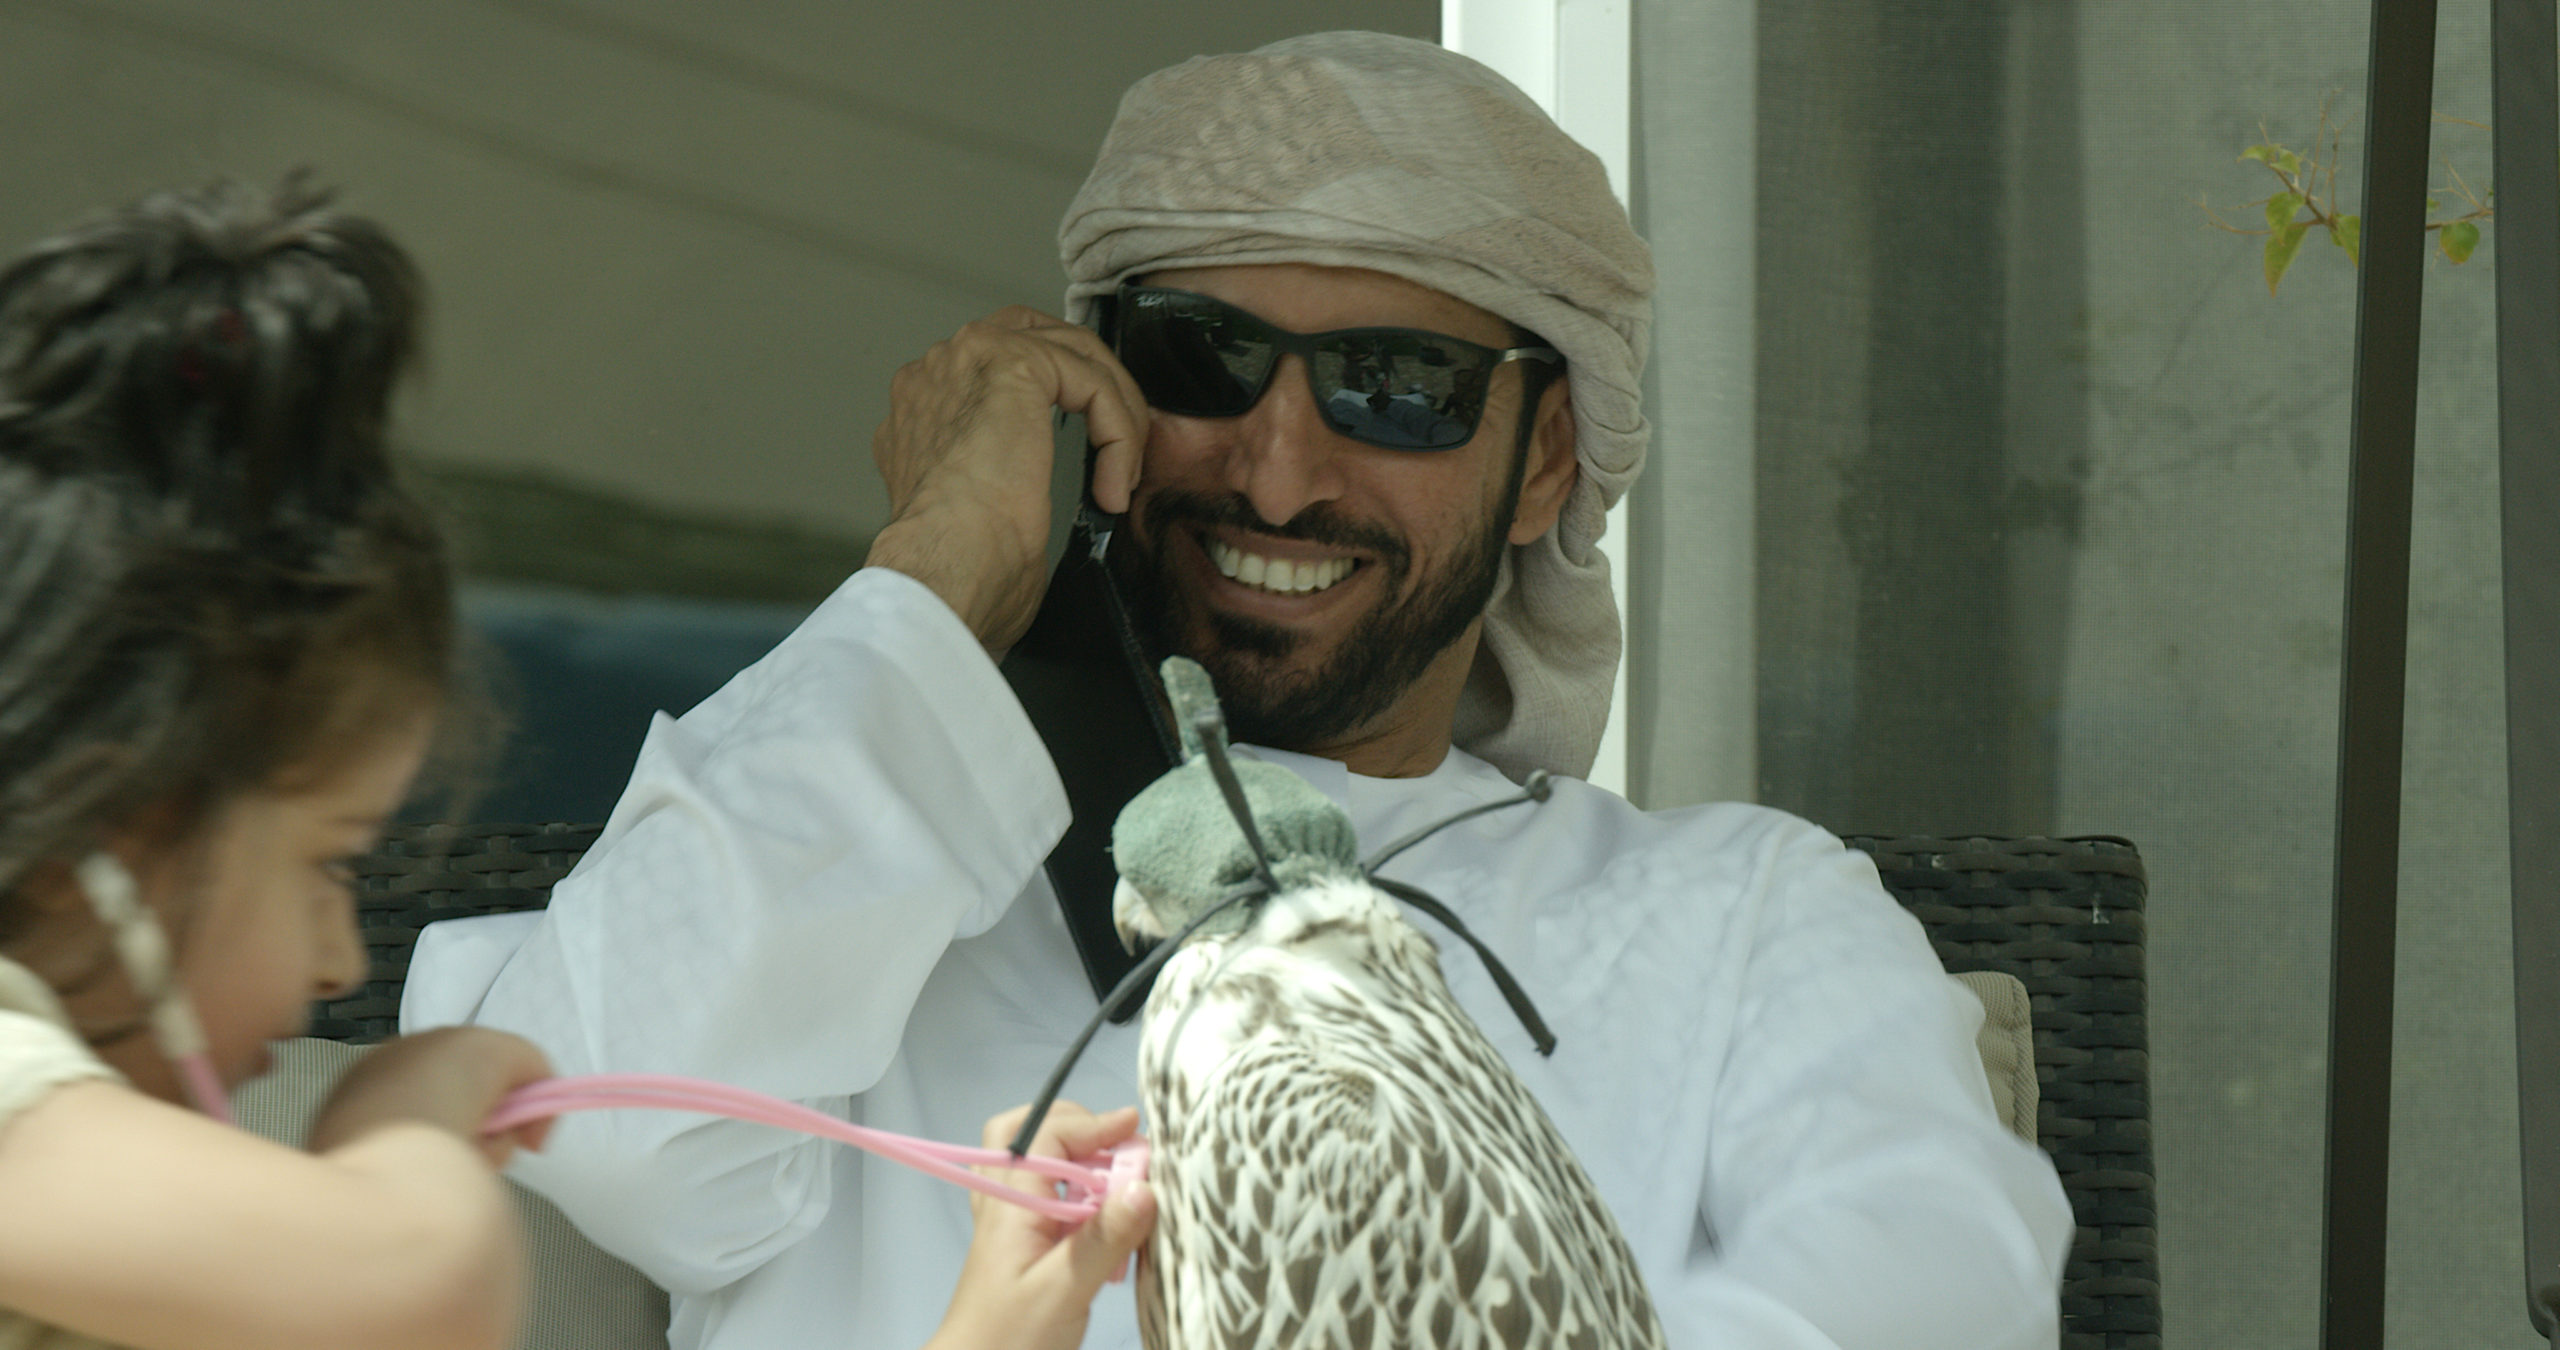 Khalifa Bin Mujren and daughter with falcon in Dubai, UAE.